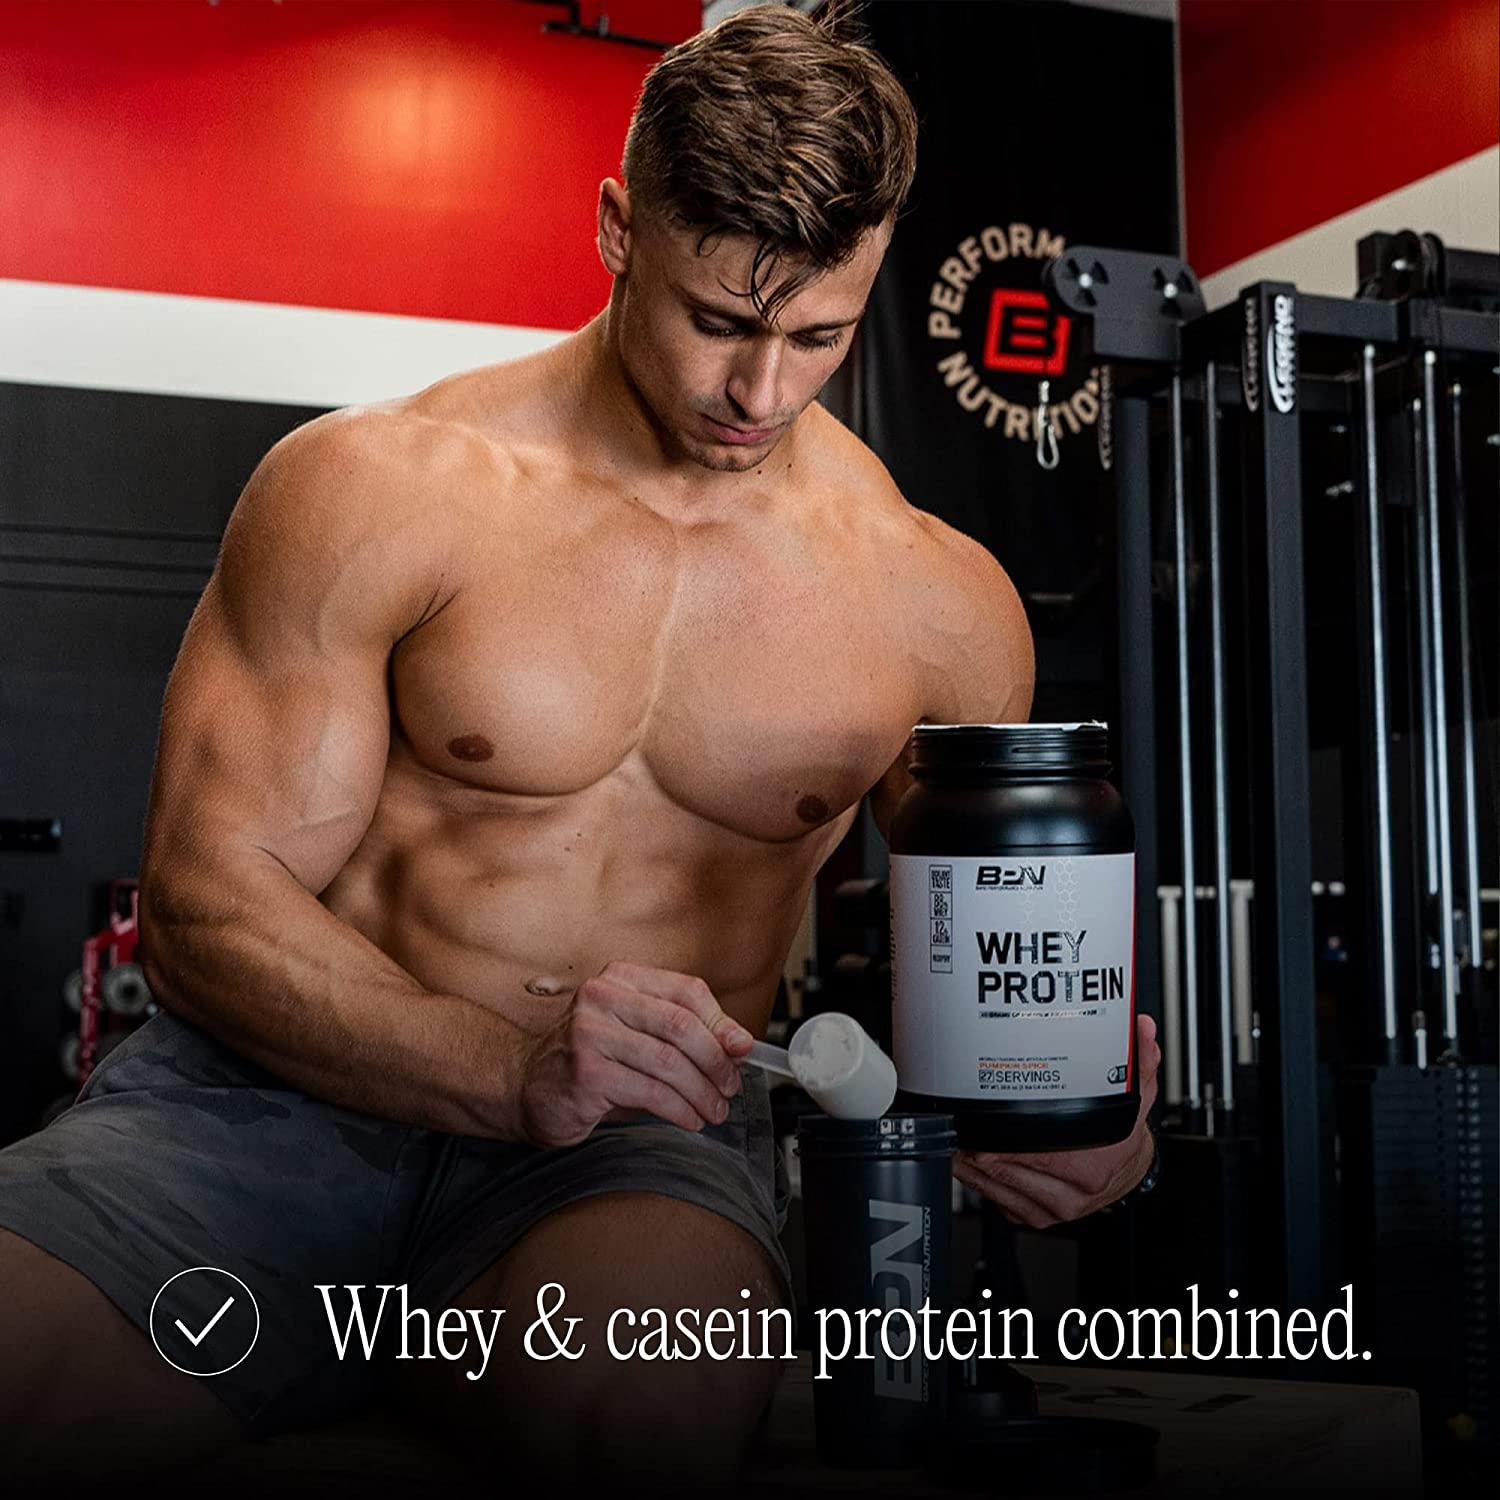 Bare Performance Nutrition Whey Protein Powder - Nutter Bar Blast